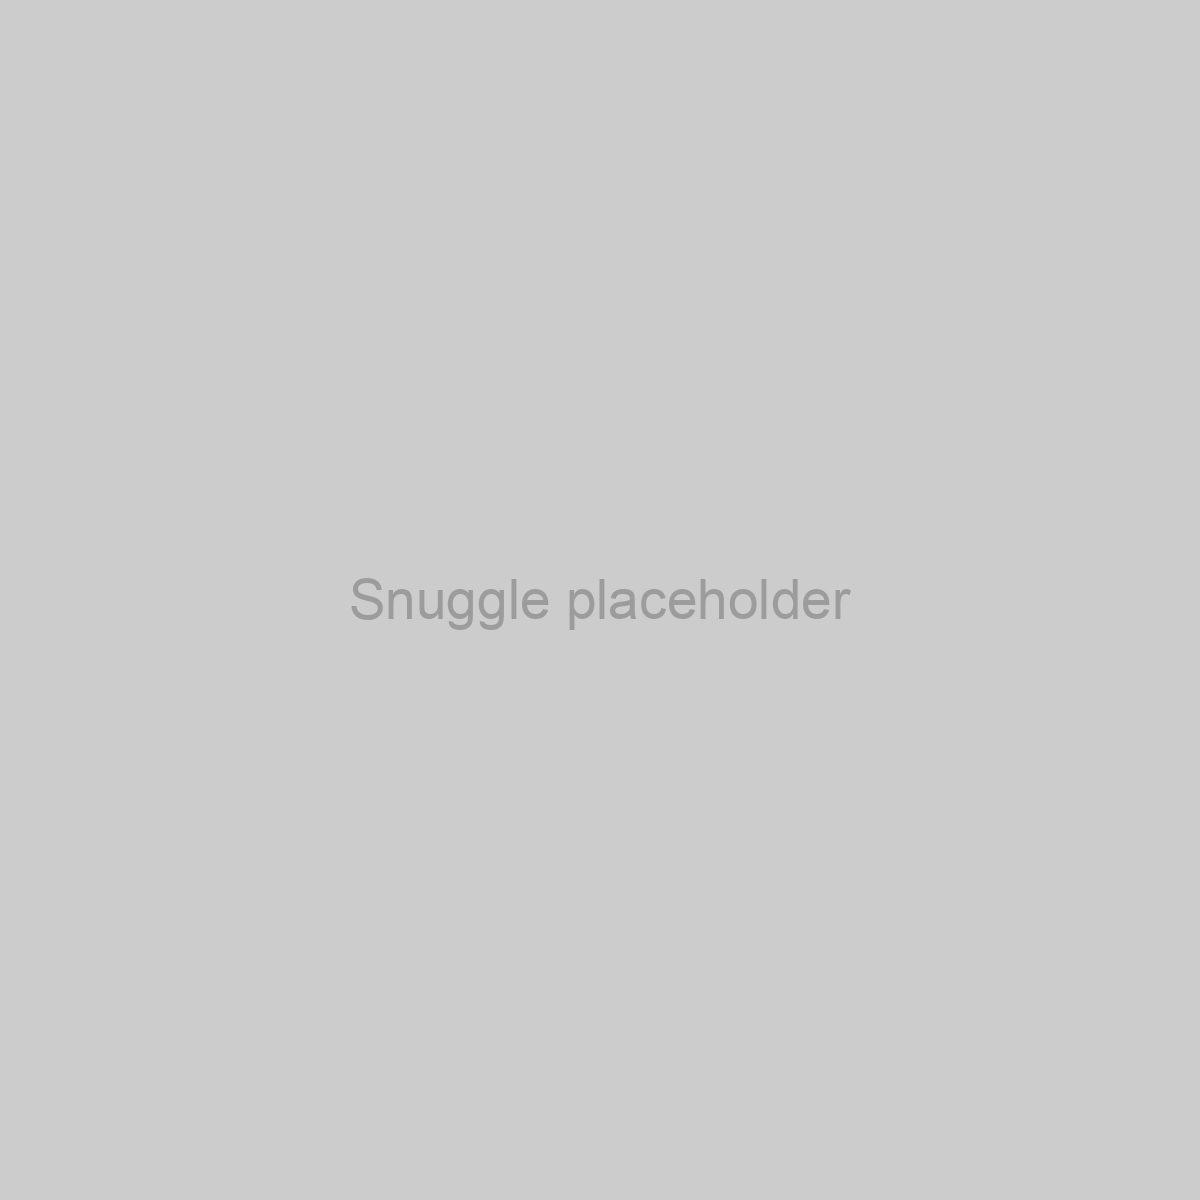 Snuggle Placeholder Image